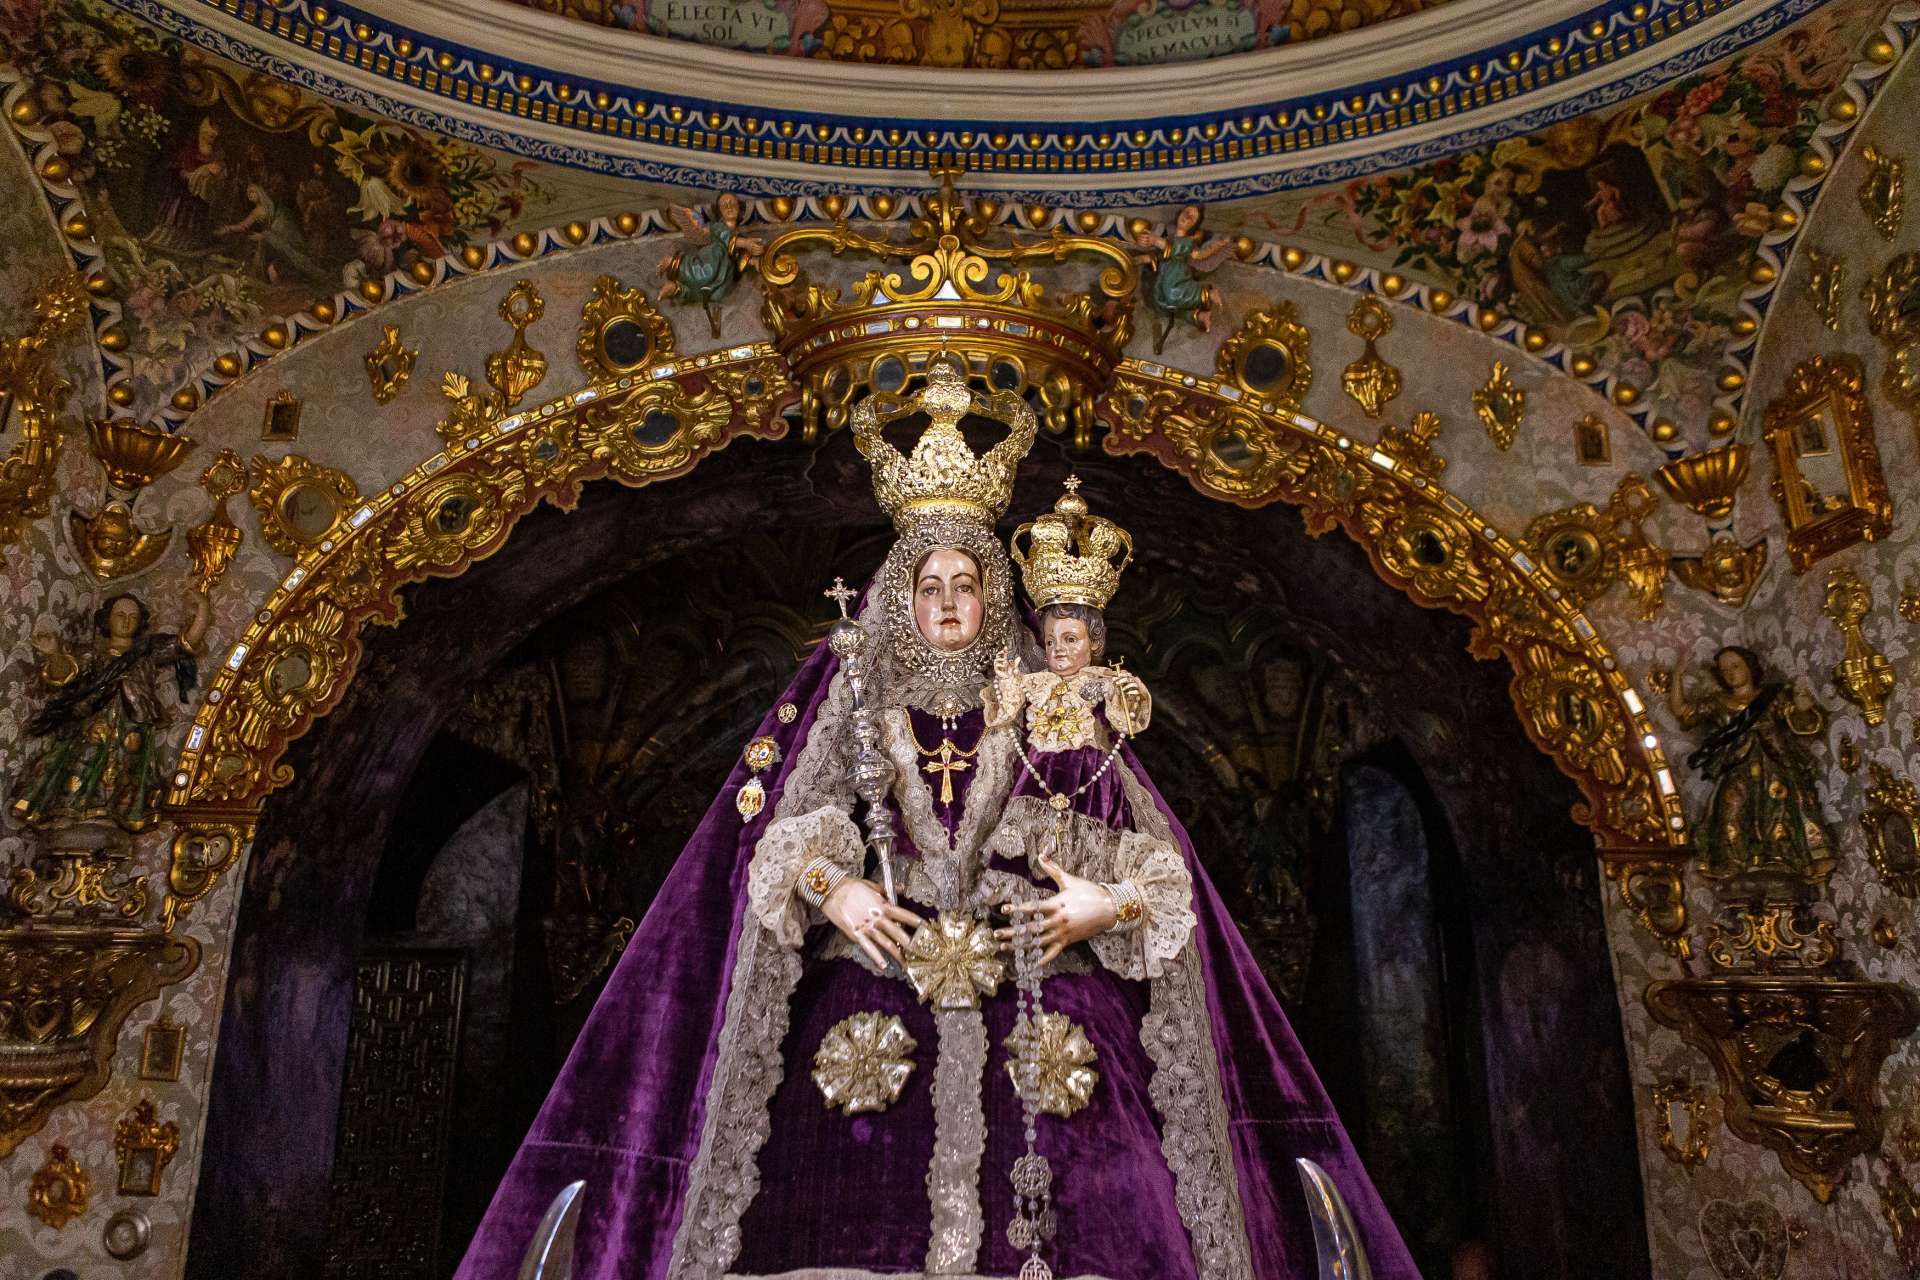 Royal Sanctuary of Most Holy Mary of Araceli.